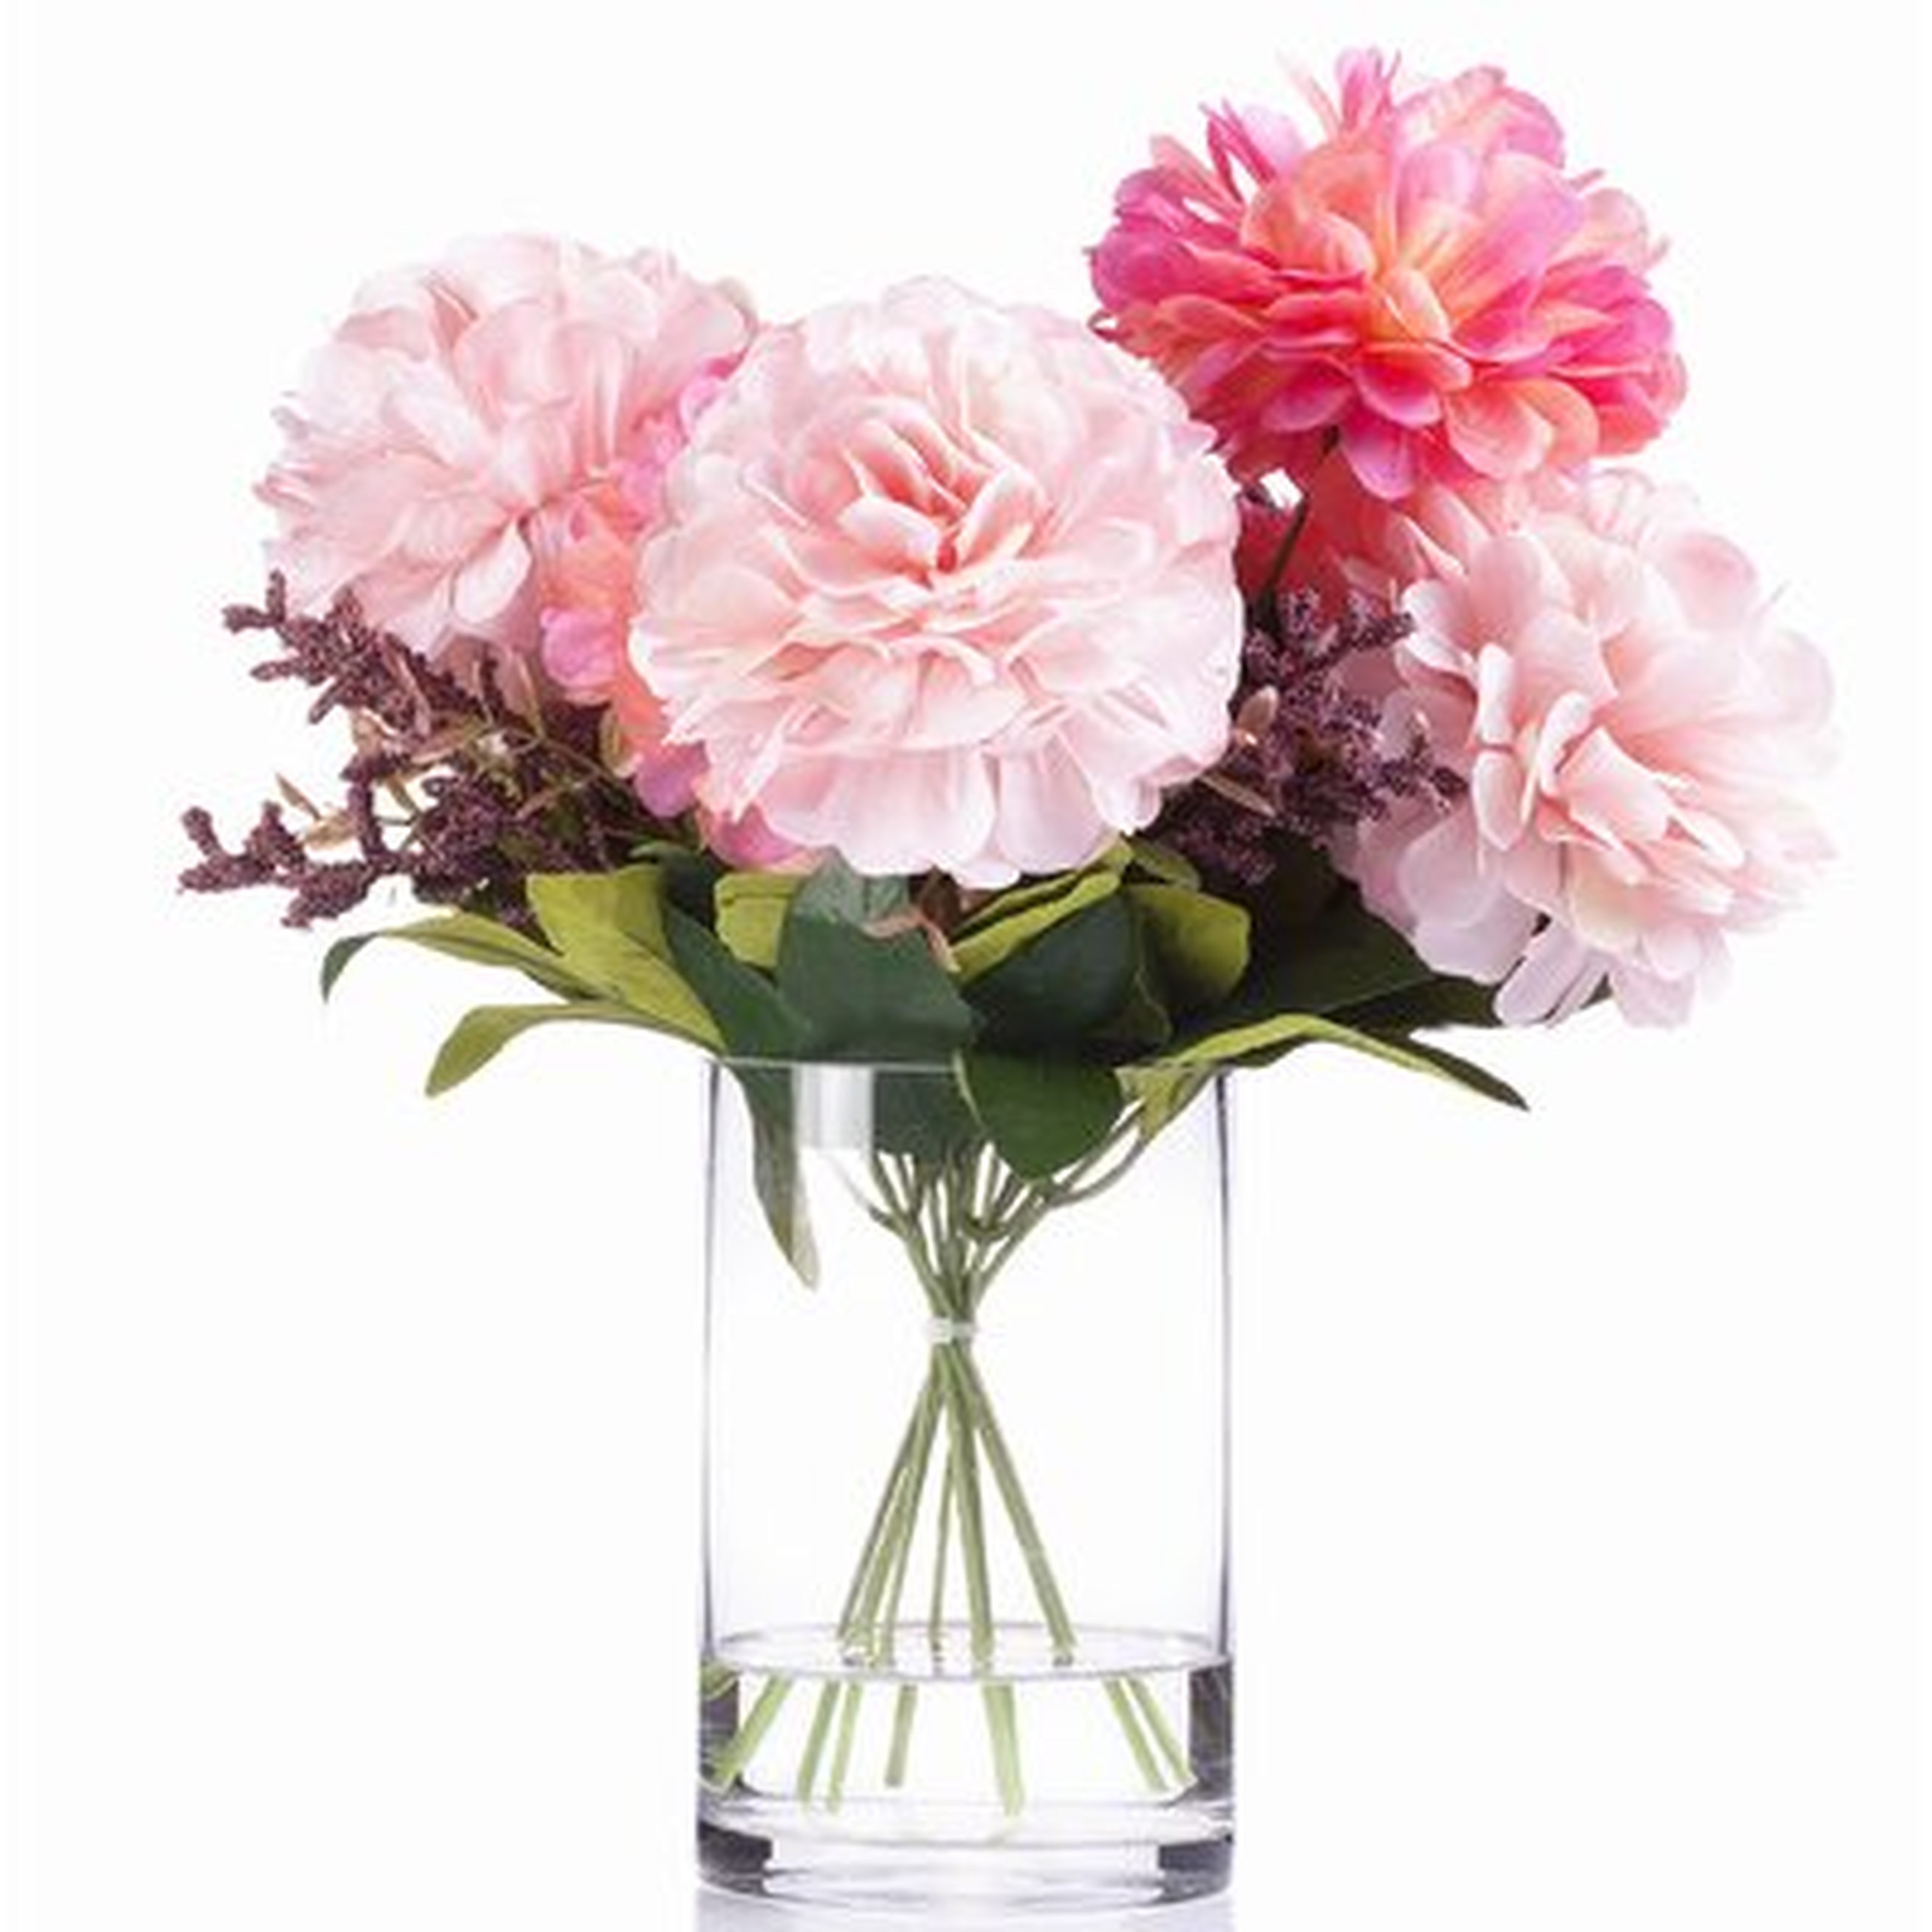 Dahlia Floral Arrangements in Vase - Wayfair